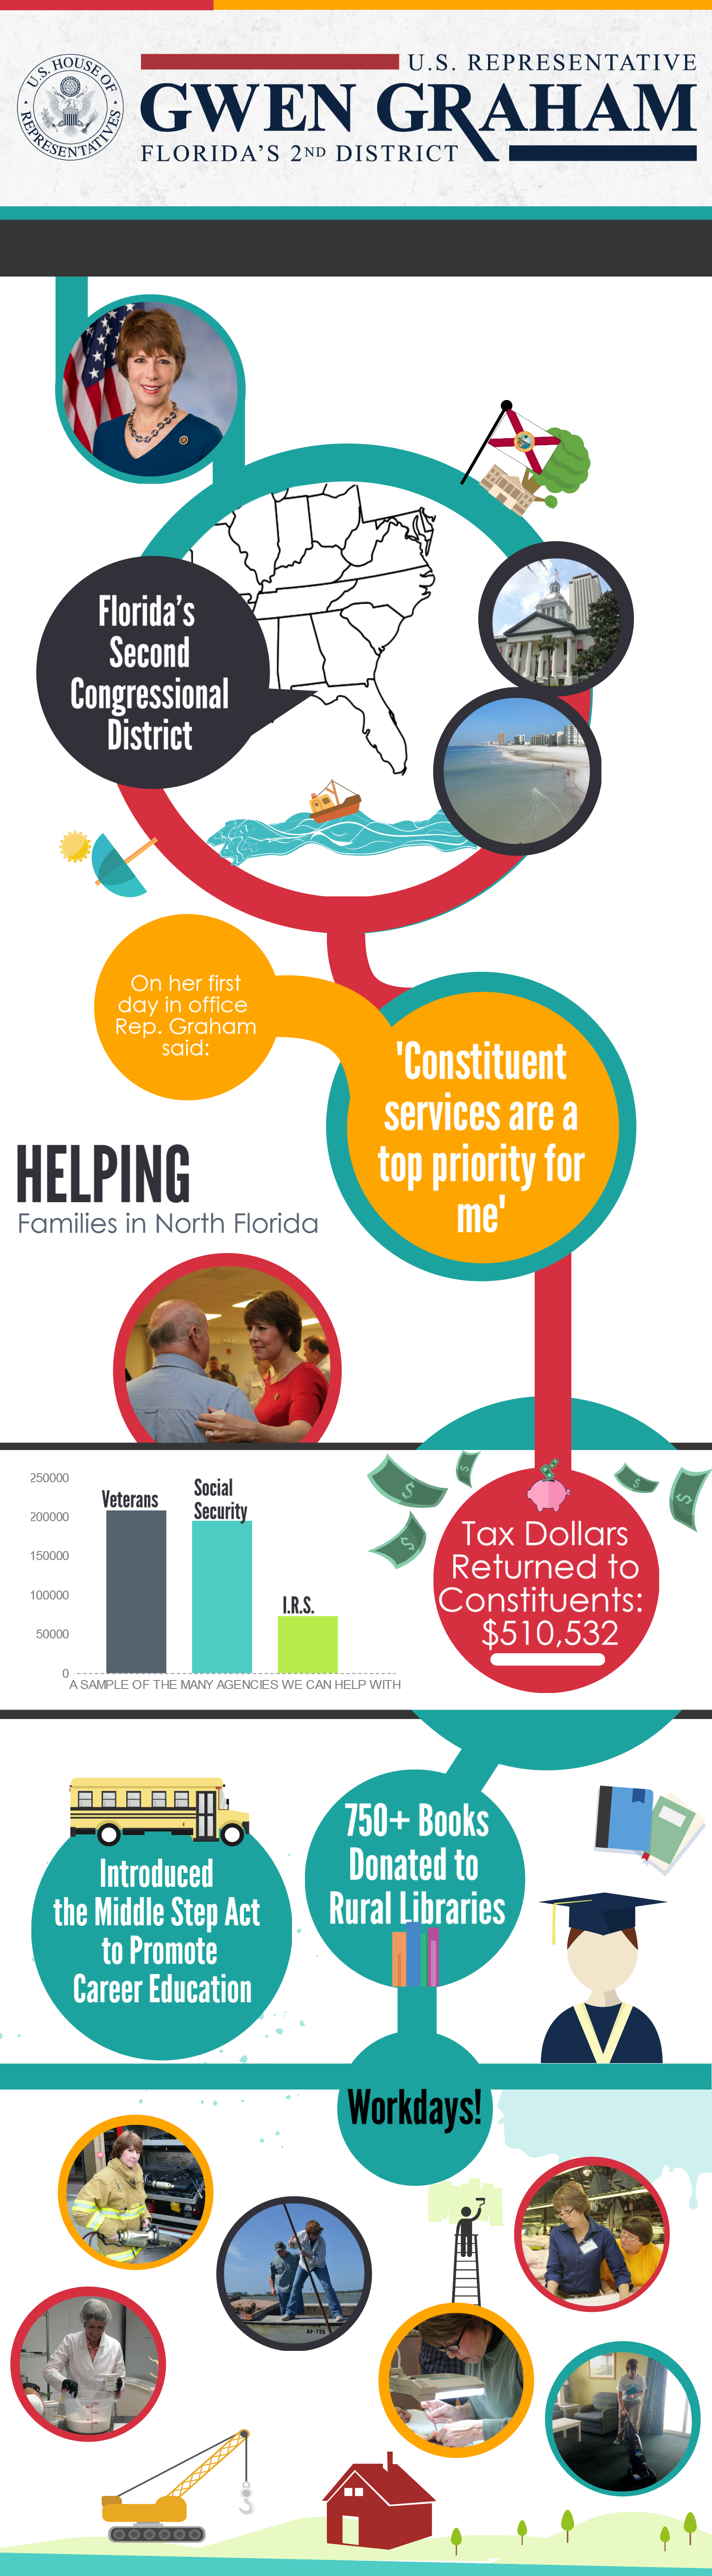 Gwen Graham Constituent Services Infographic